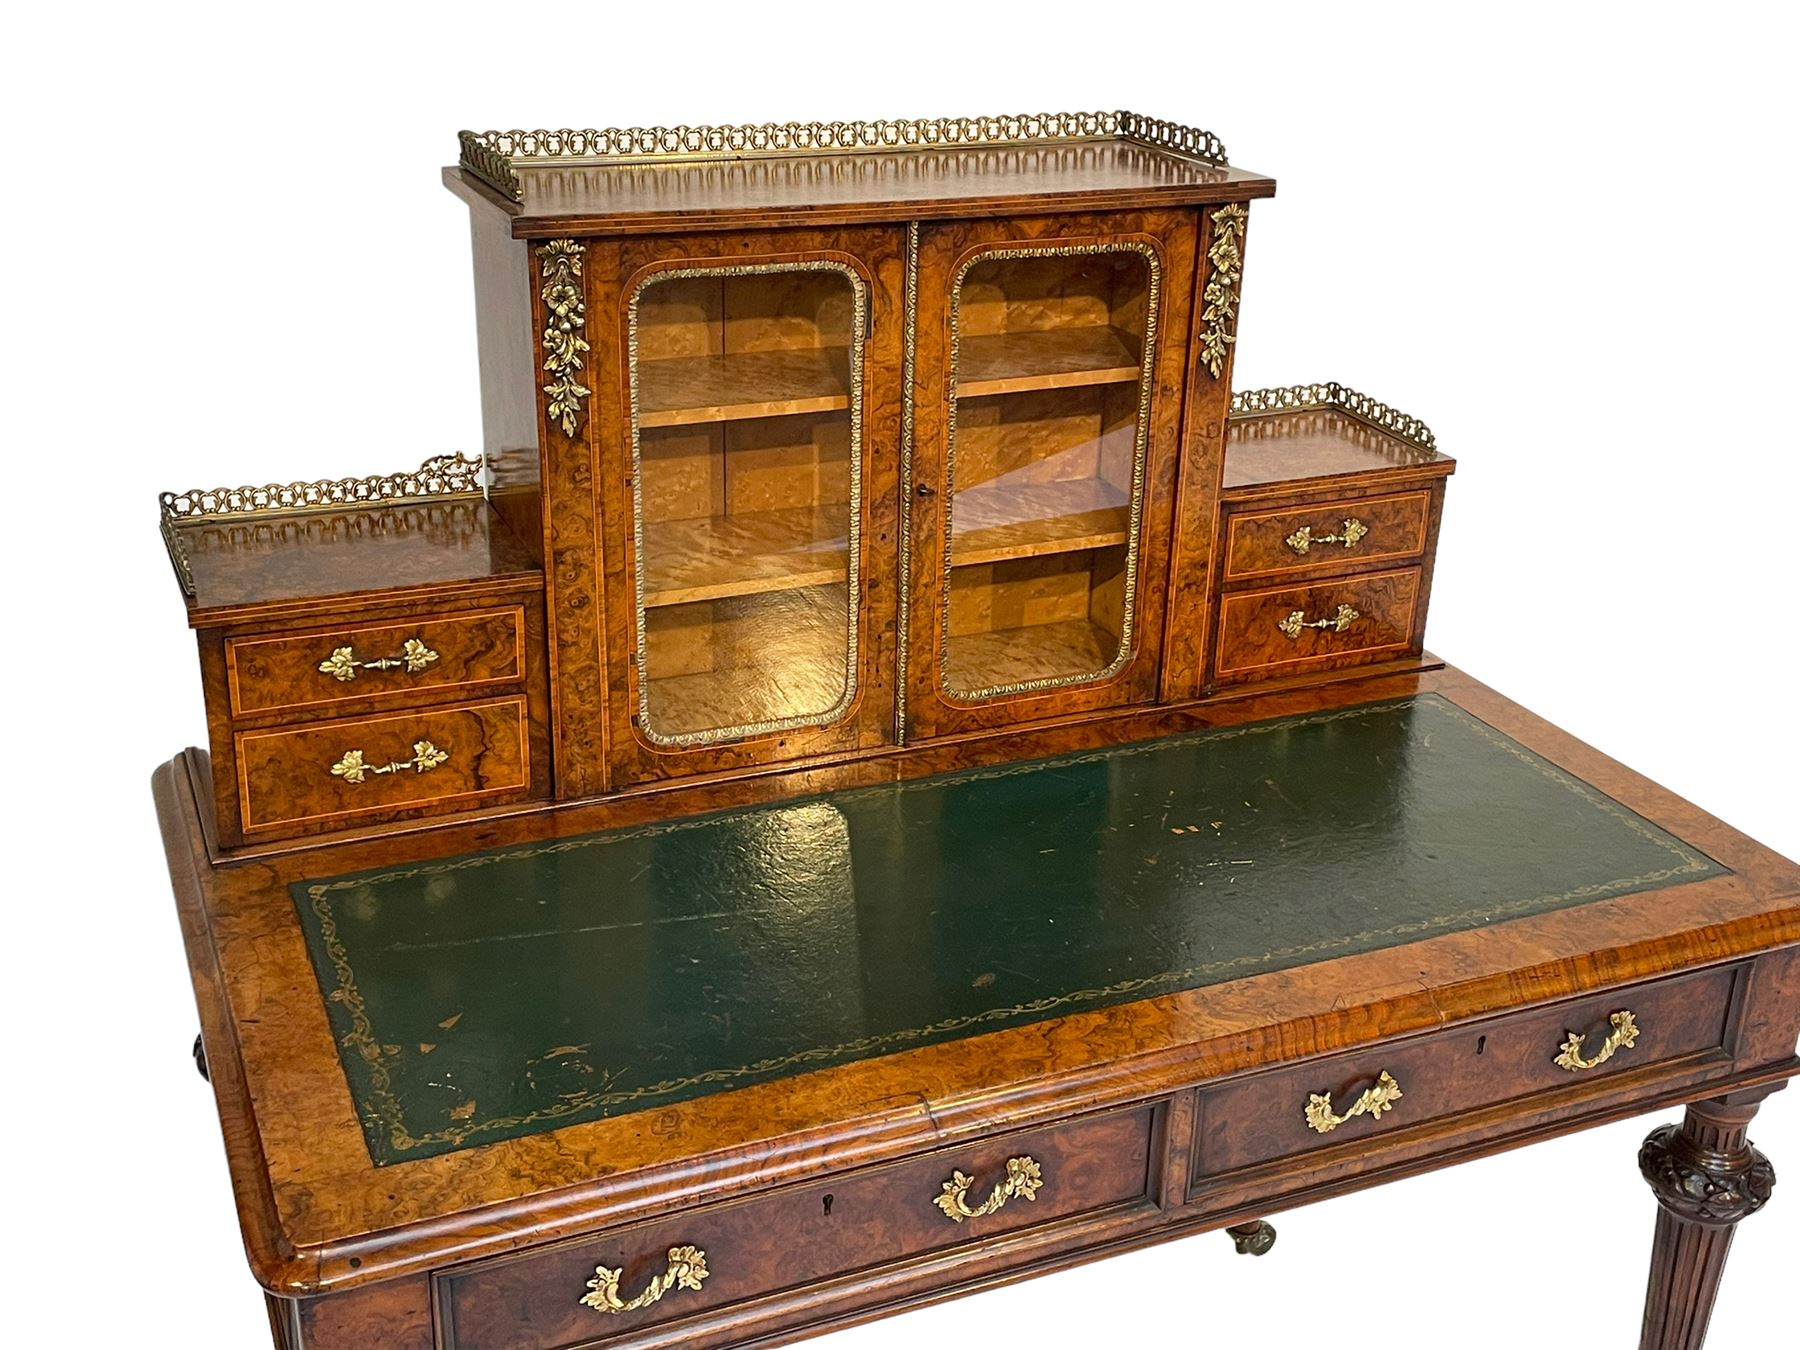 19th century figured walnut lady's writing desk or Bonheur du Jour - Image 4 of 14